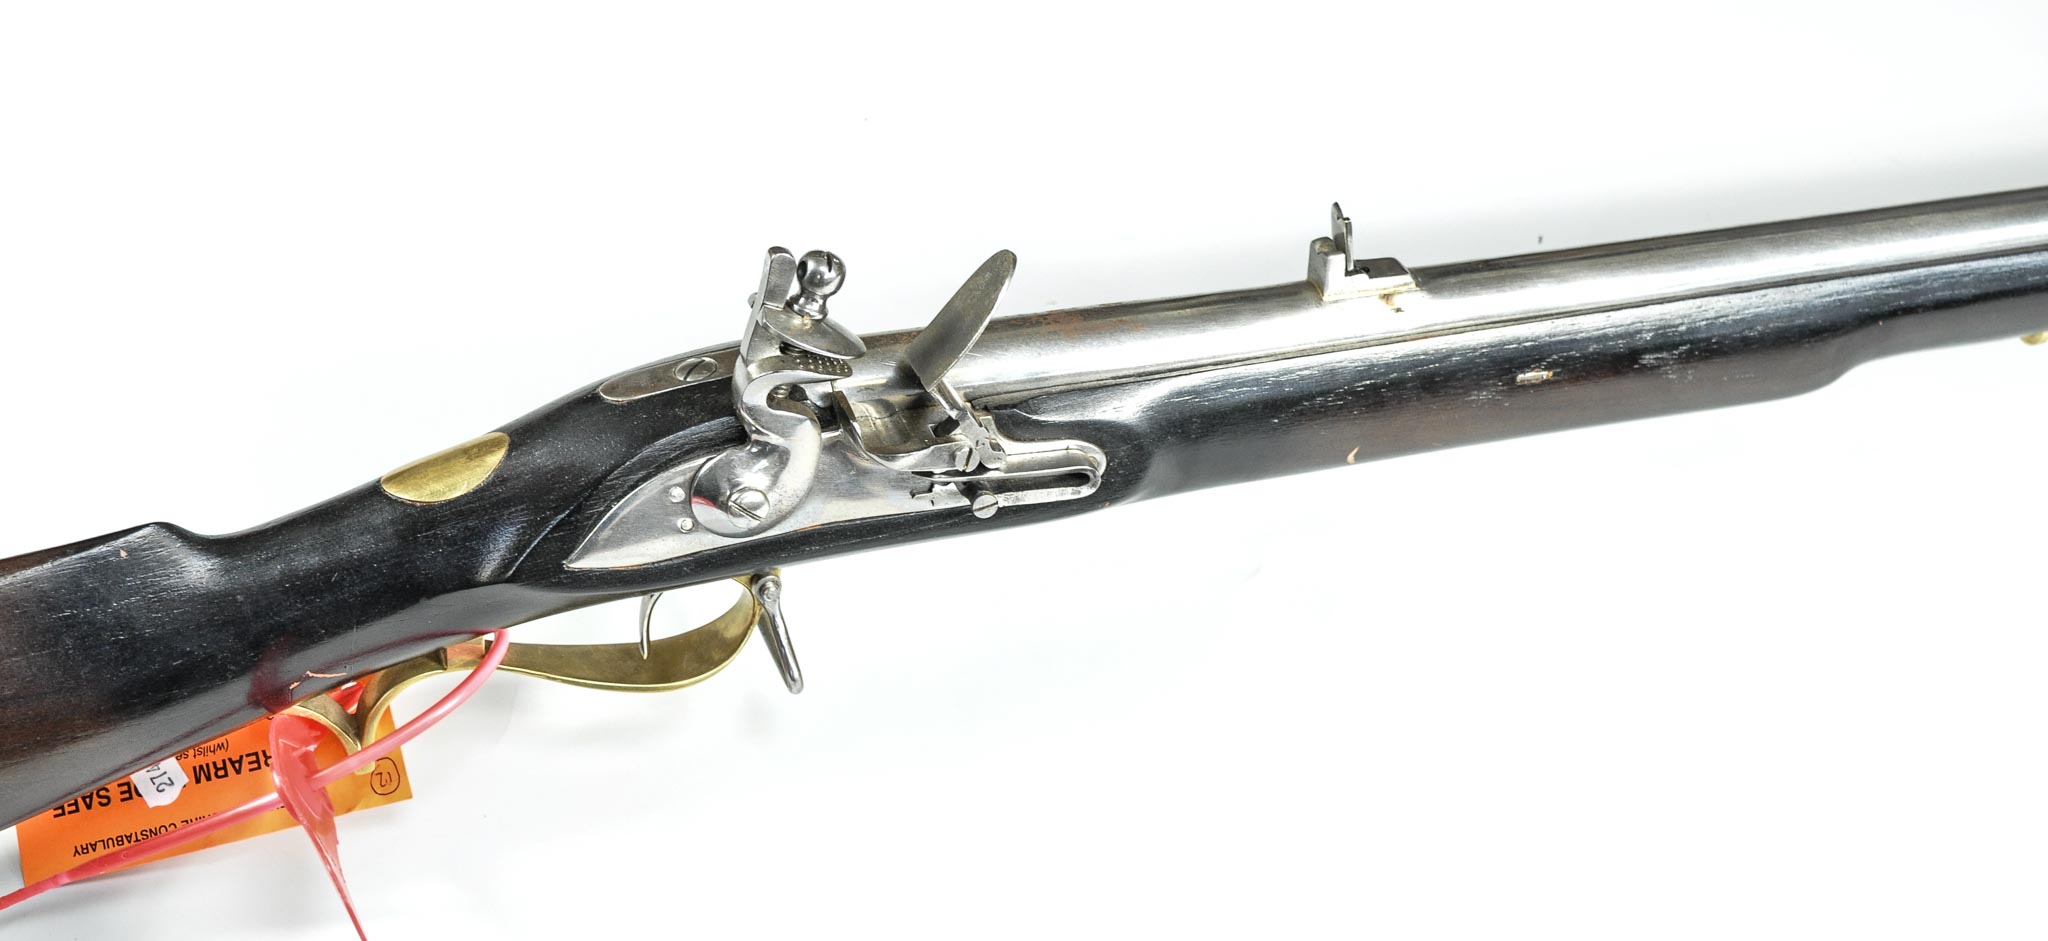 Replica Flintlock Musket, full wooden stock, overall length 120cm.